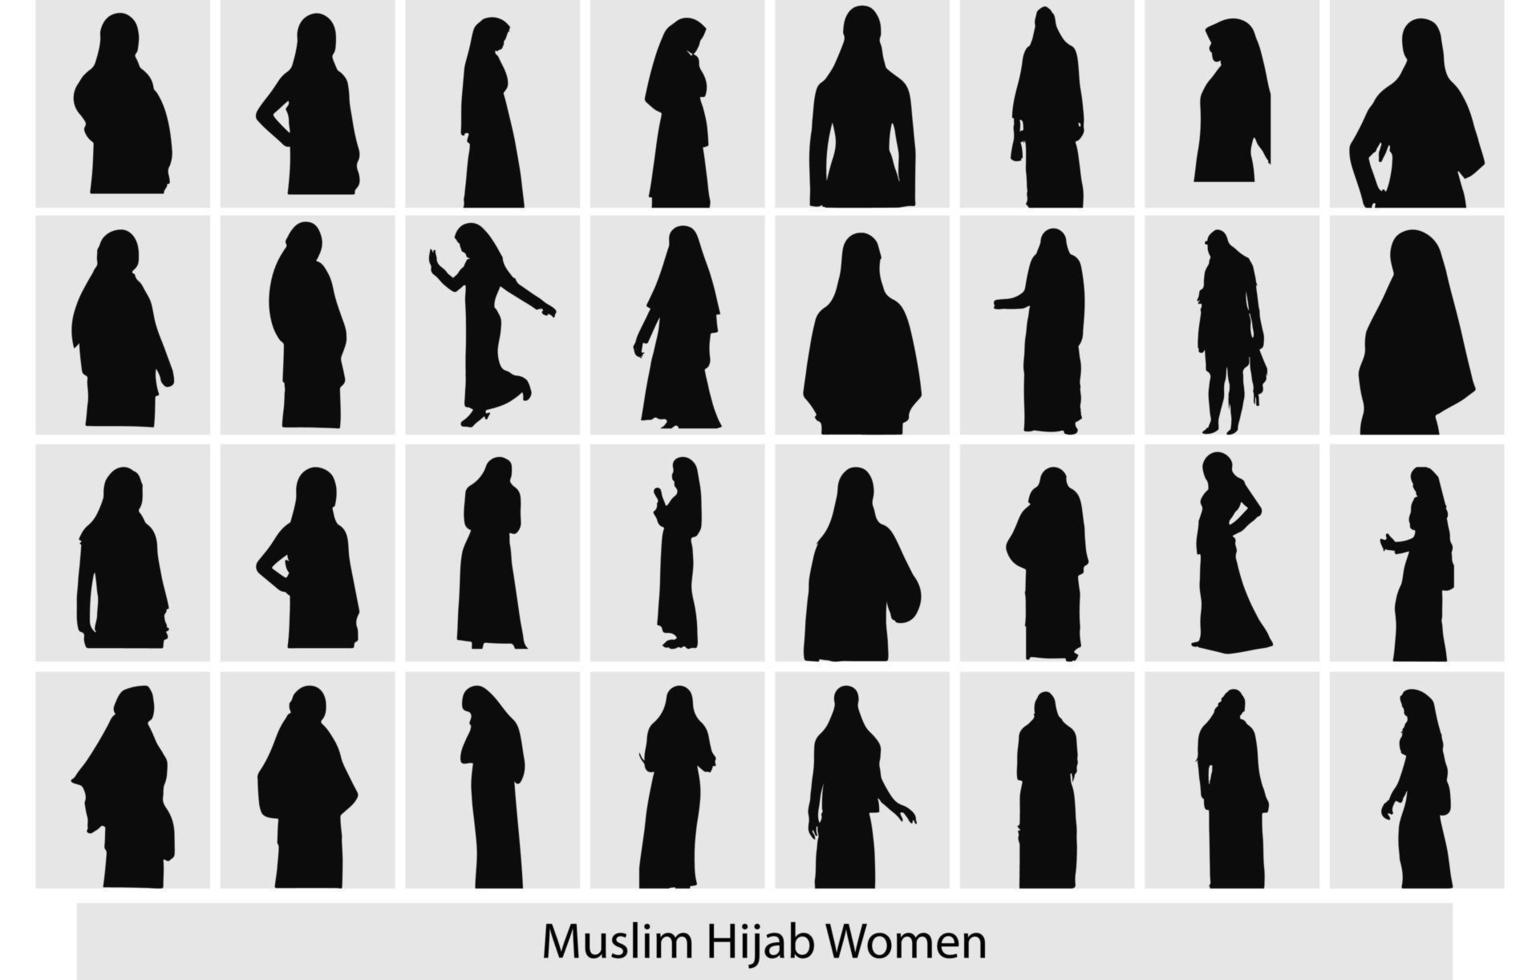 Hijab woman silhouette free, Black silhouette of a hijab Muslim woman, Set of Muslim woman silhouette with hijab,  Muslim woman in hijab fashion silhouette vector